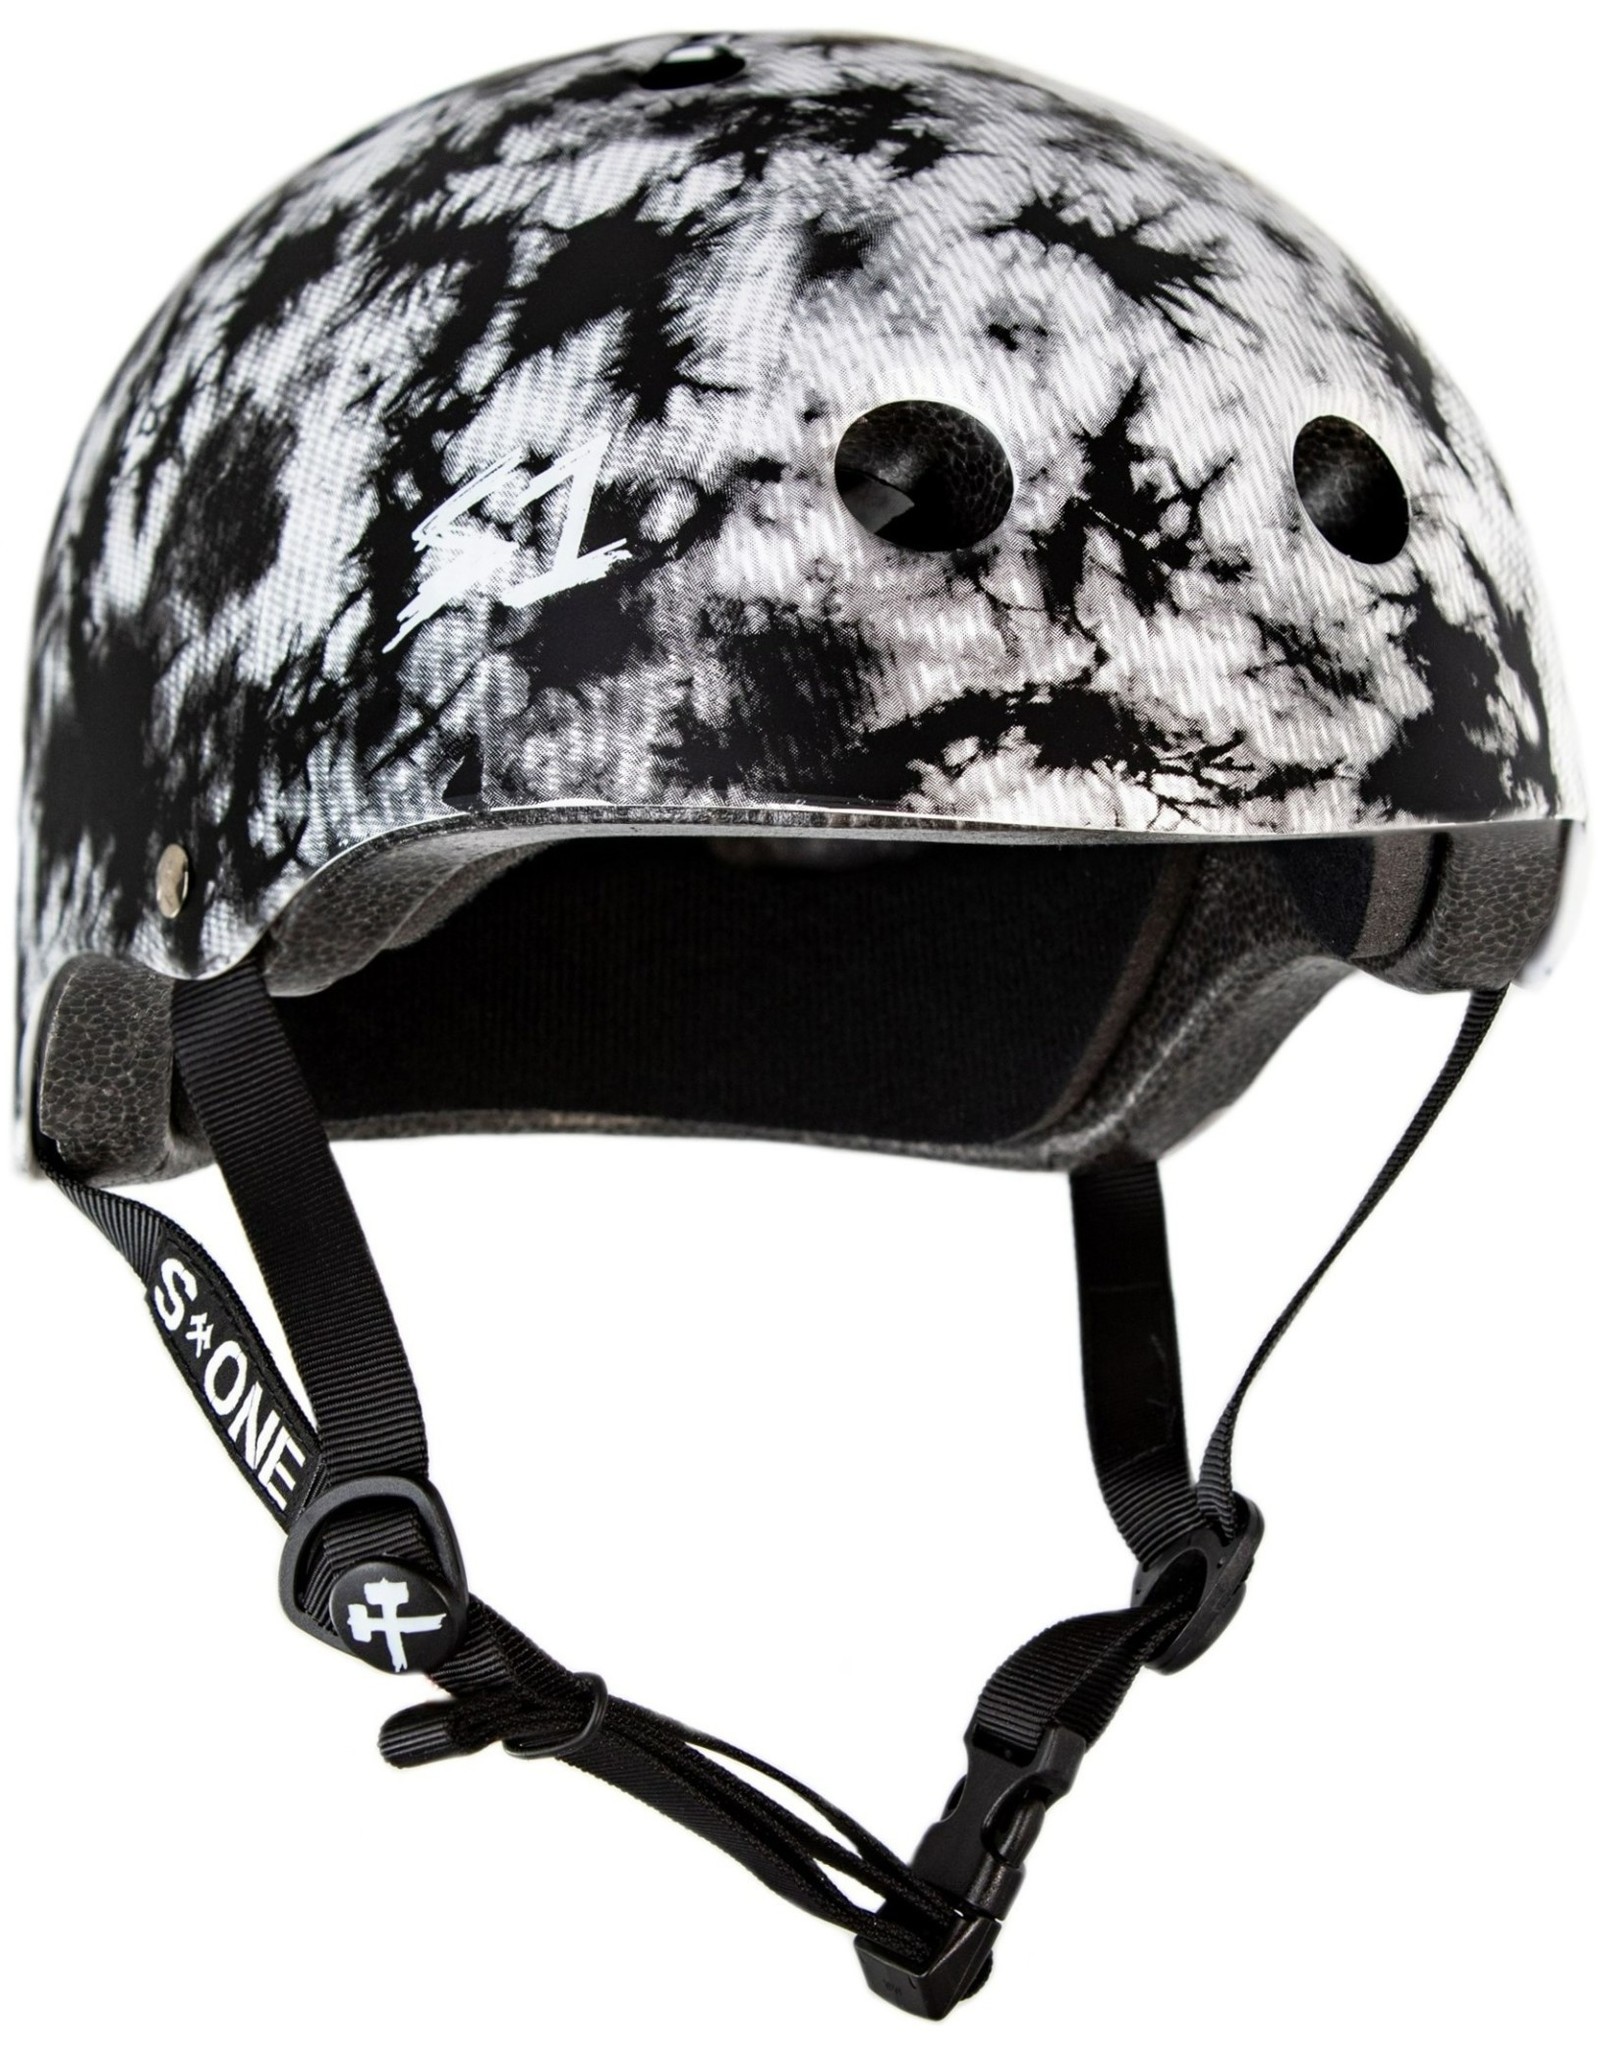 S-One S1 Lifer Helmet - Print